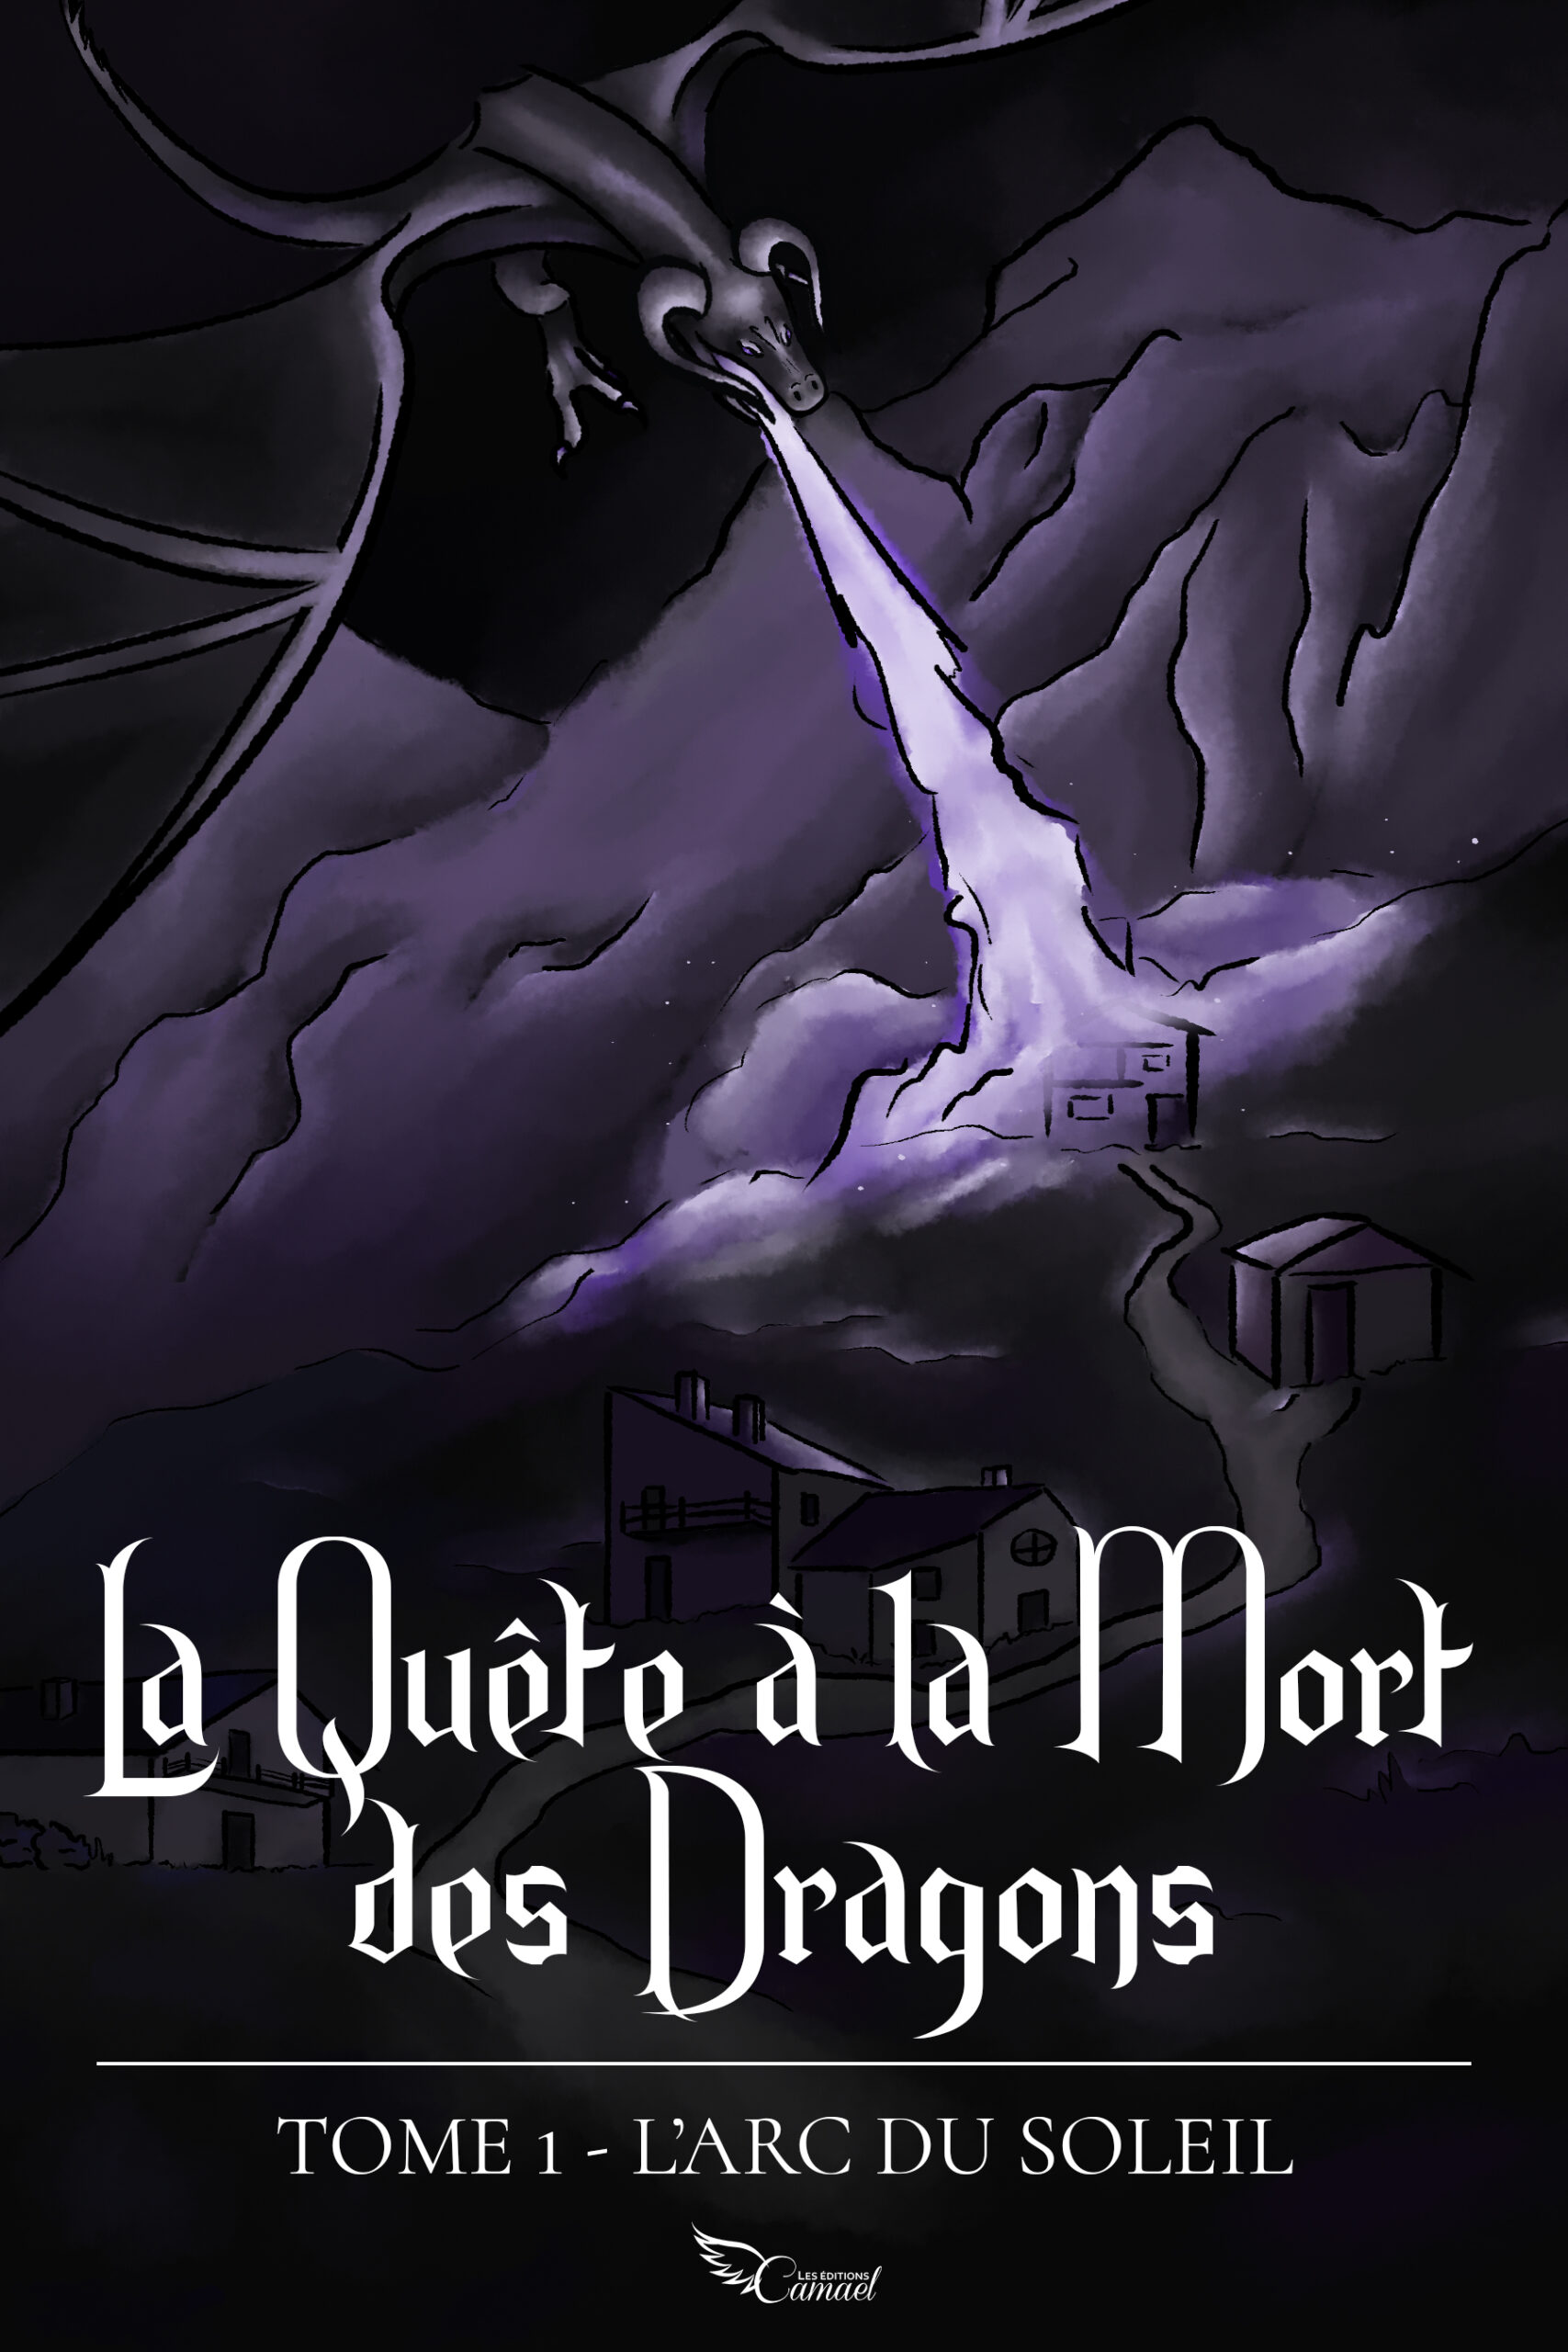 La Quete a la mort des dragons - Cover